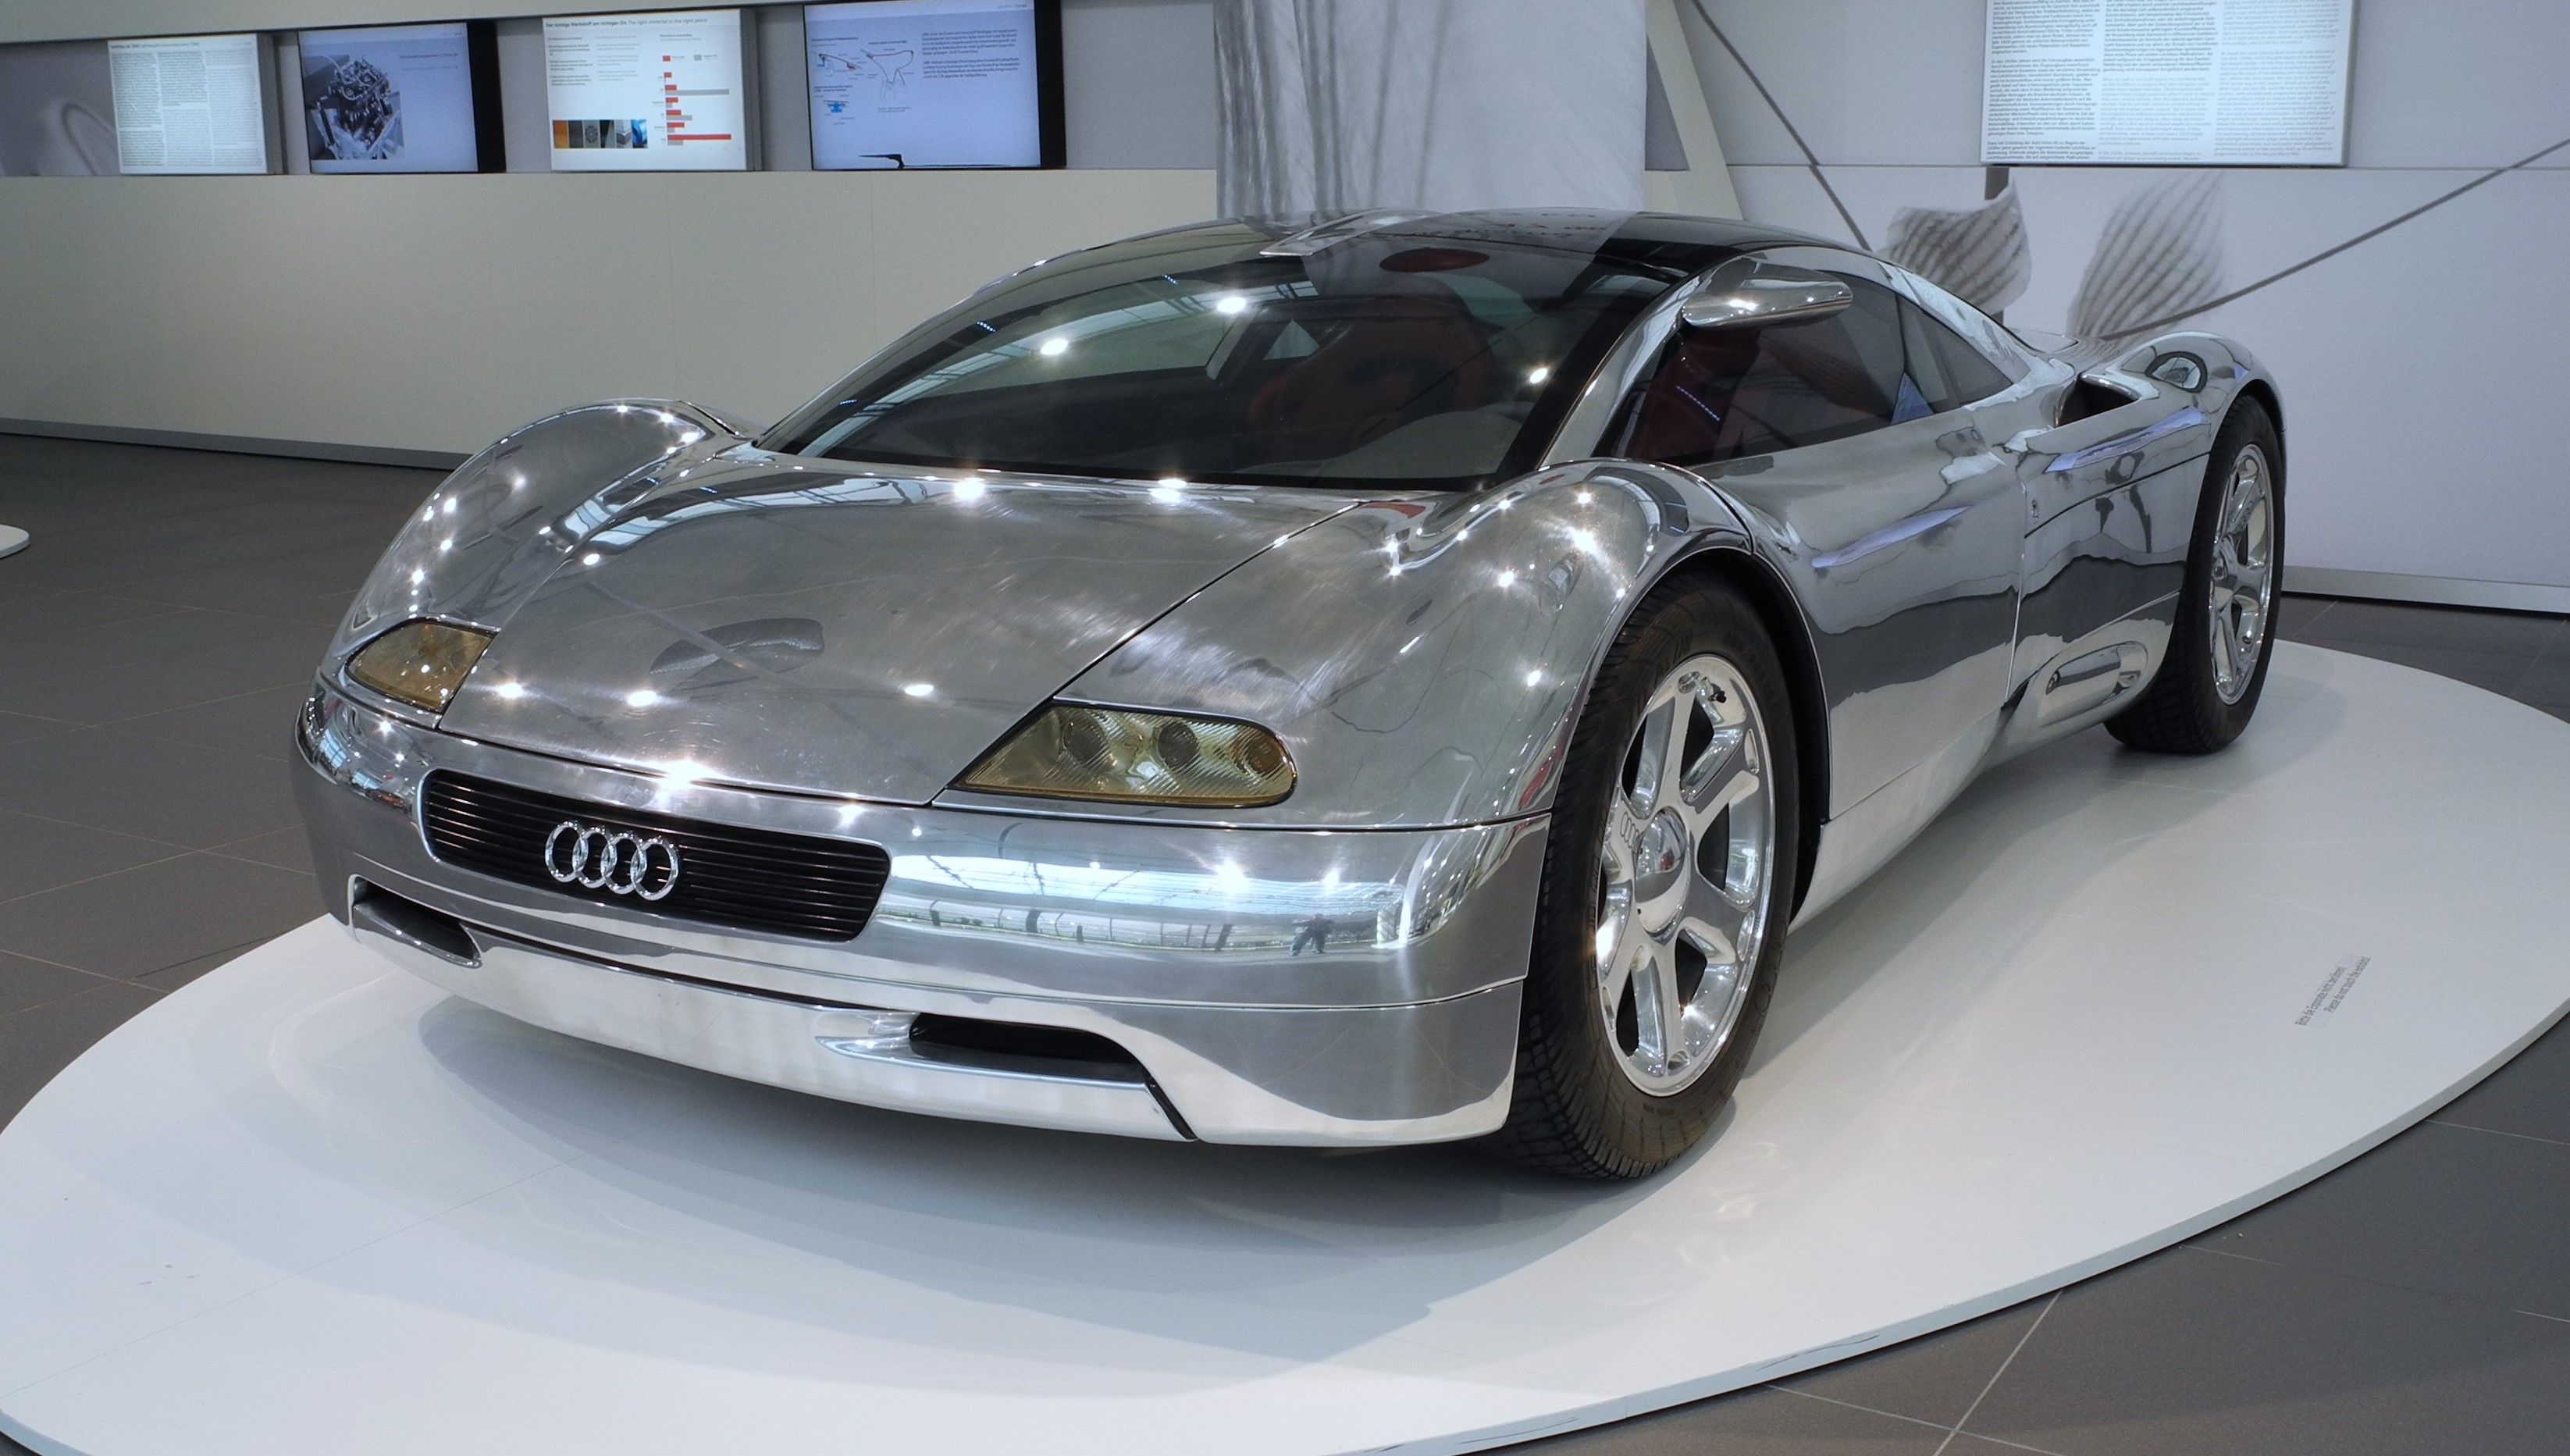 Audi Avus concept car